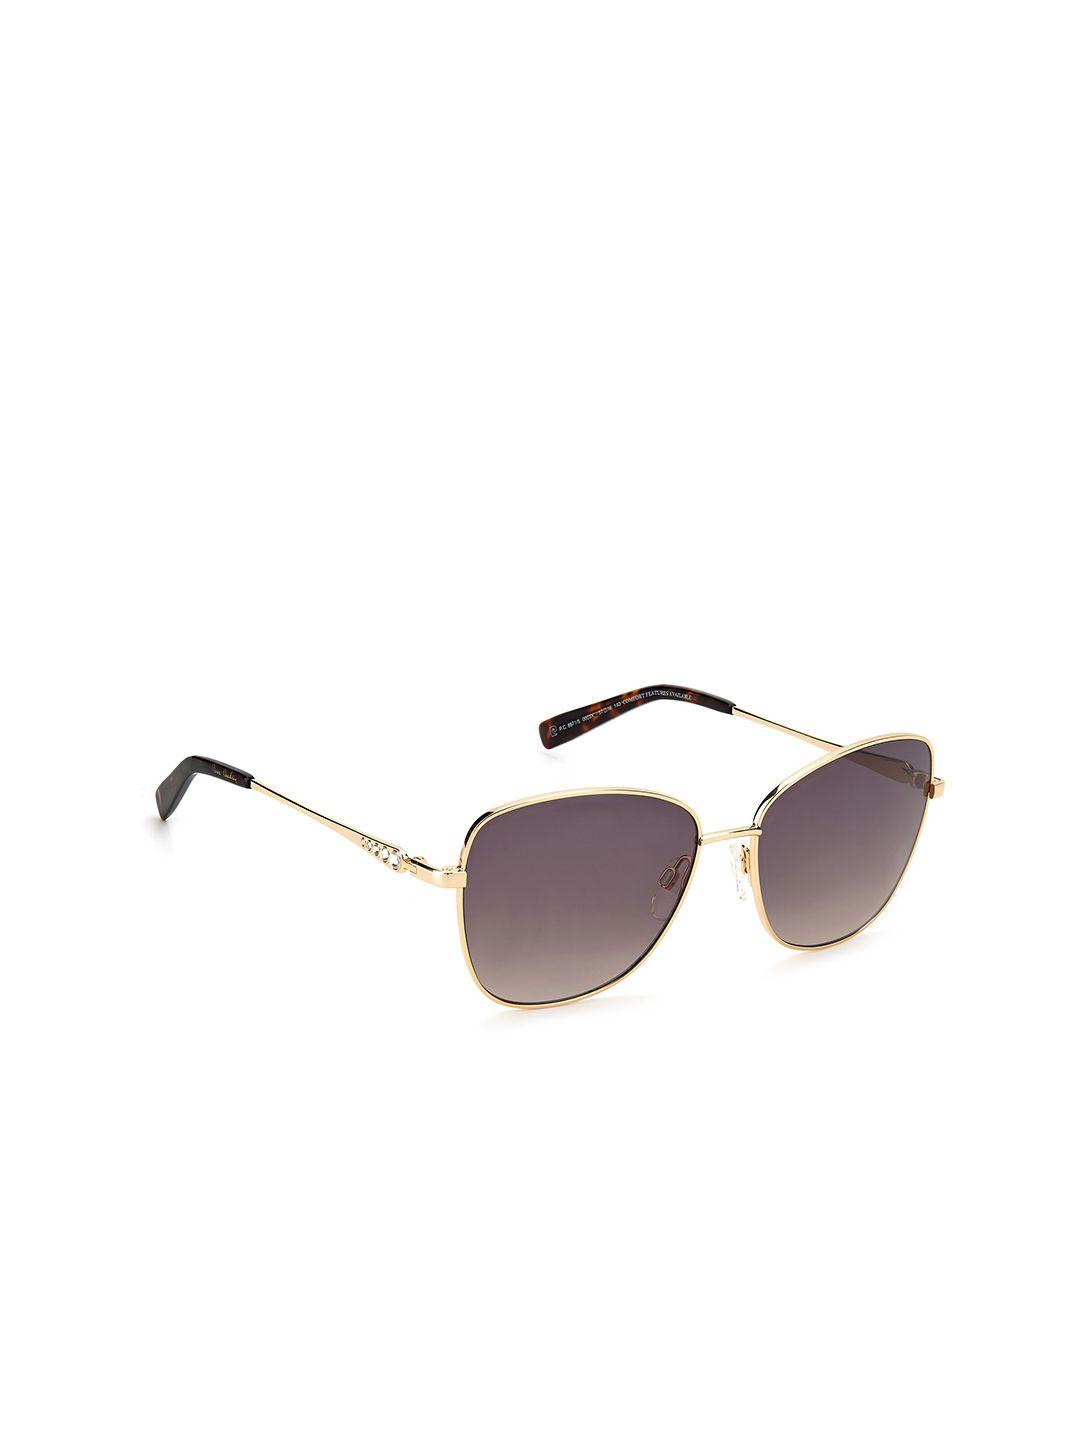 pierre cardin women square sunglasses with polarised lens-204647000573x